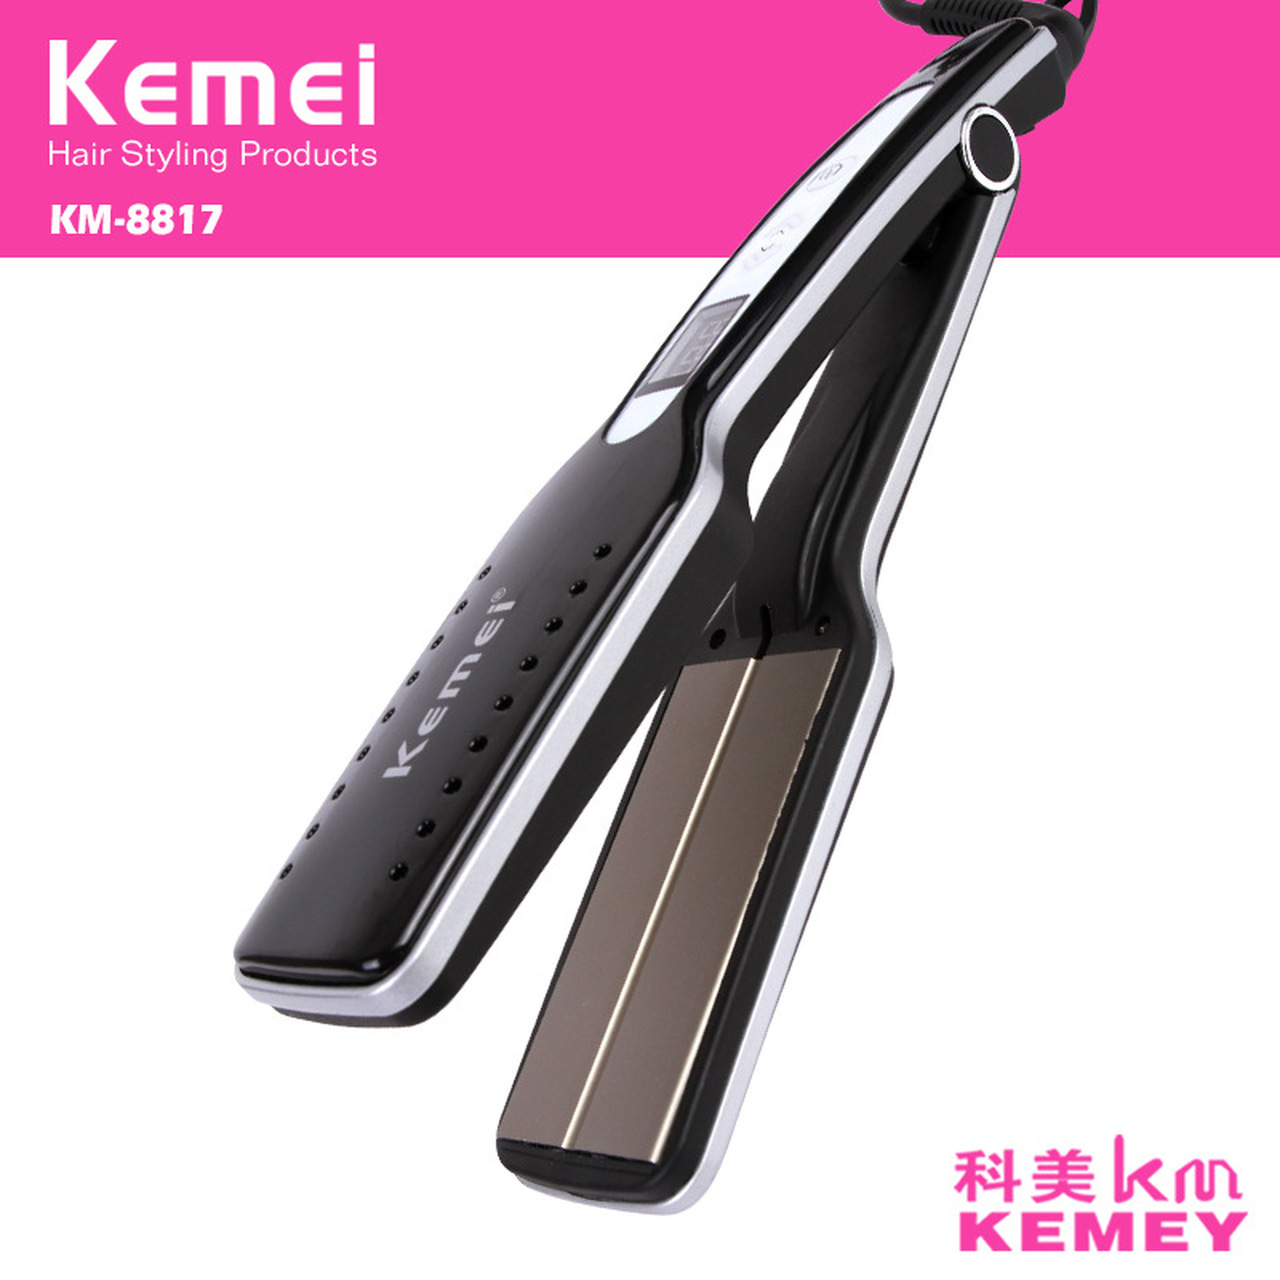 KEMEI PROFESSIONAL HAIR STRAIGHTENER CURLER KM-8817